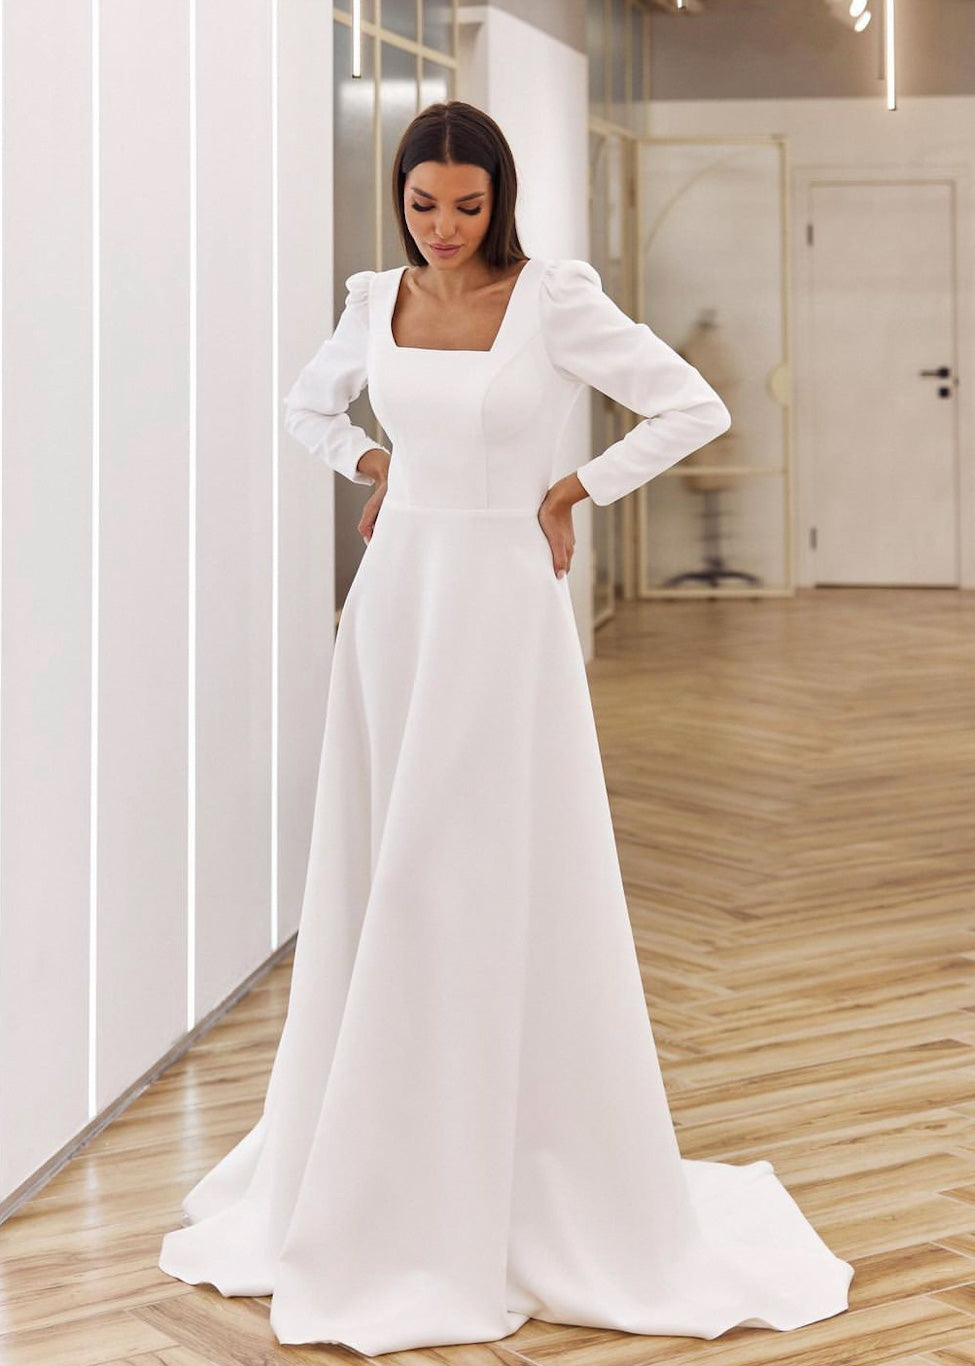 Simple A Line Long Sleeve Open Back Crepe Wedding Dress - AmberBride